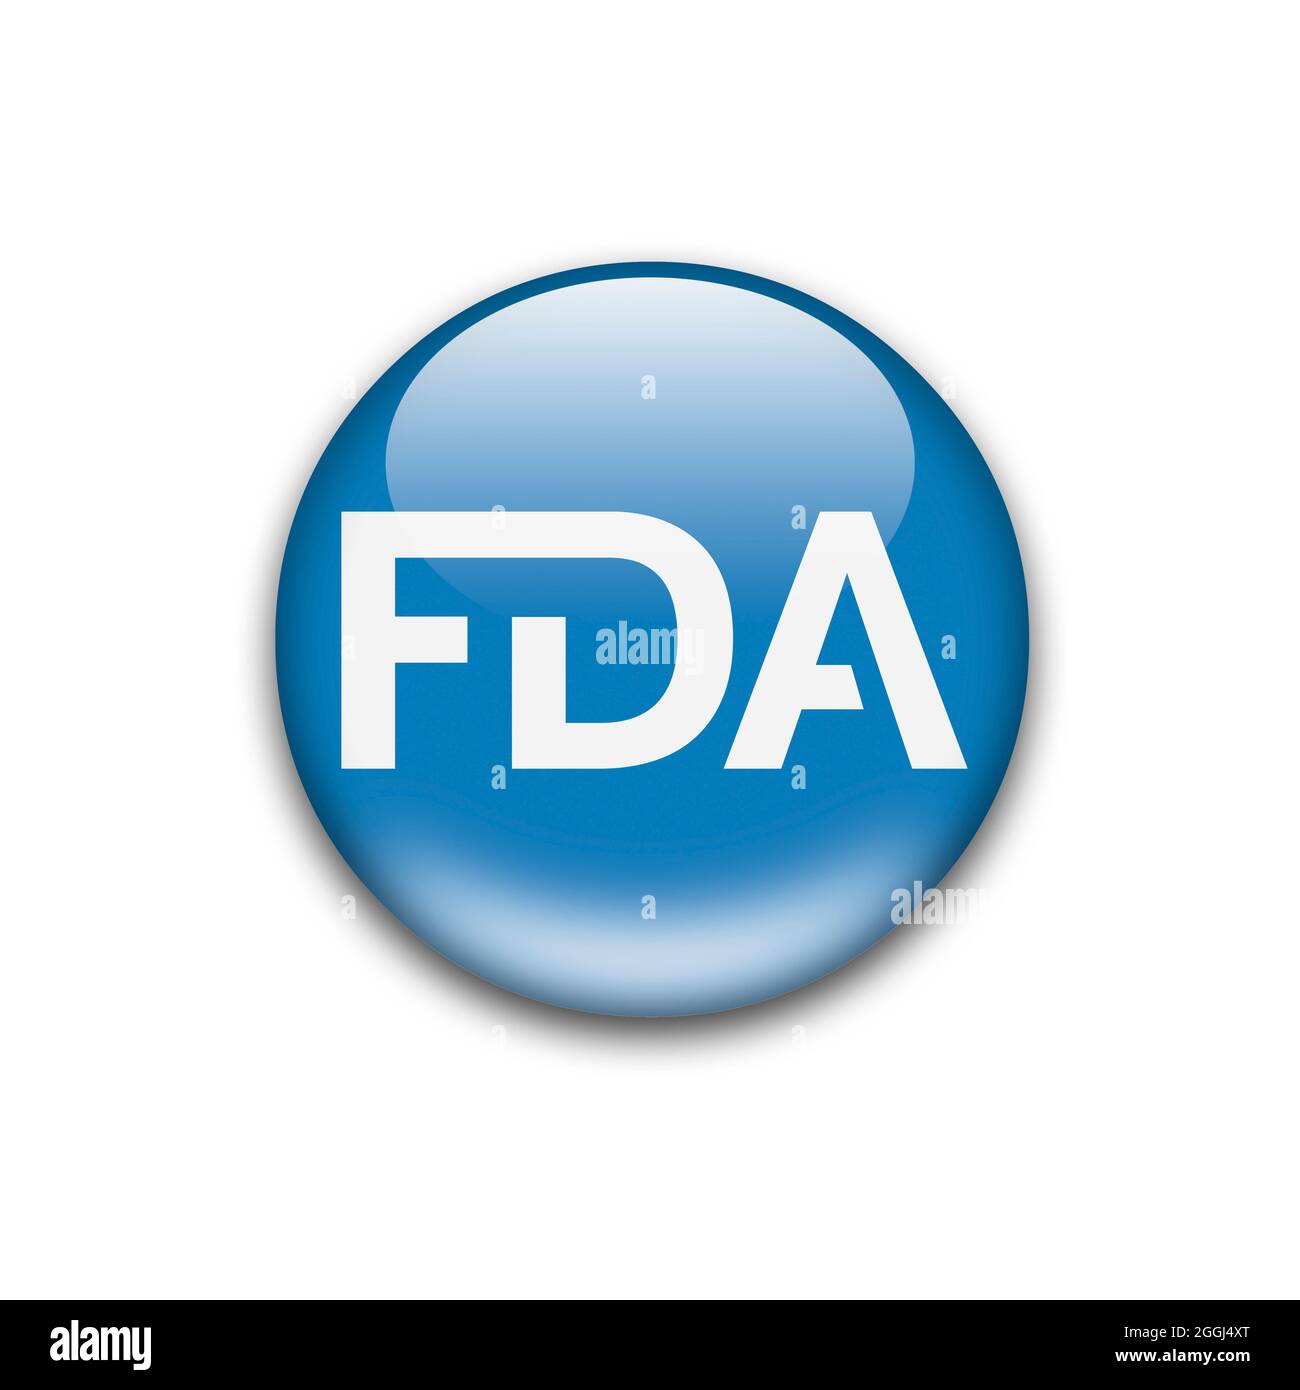 FDA logo Stock Photo